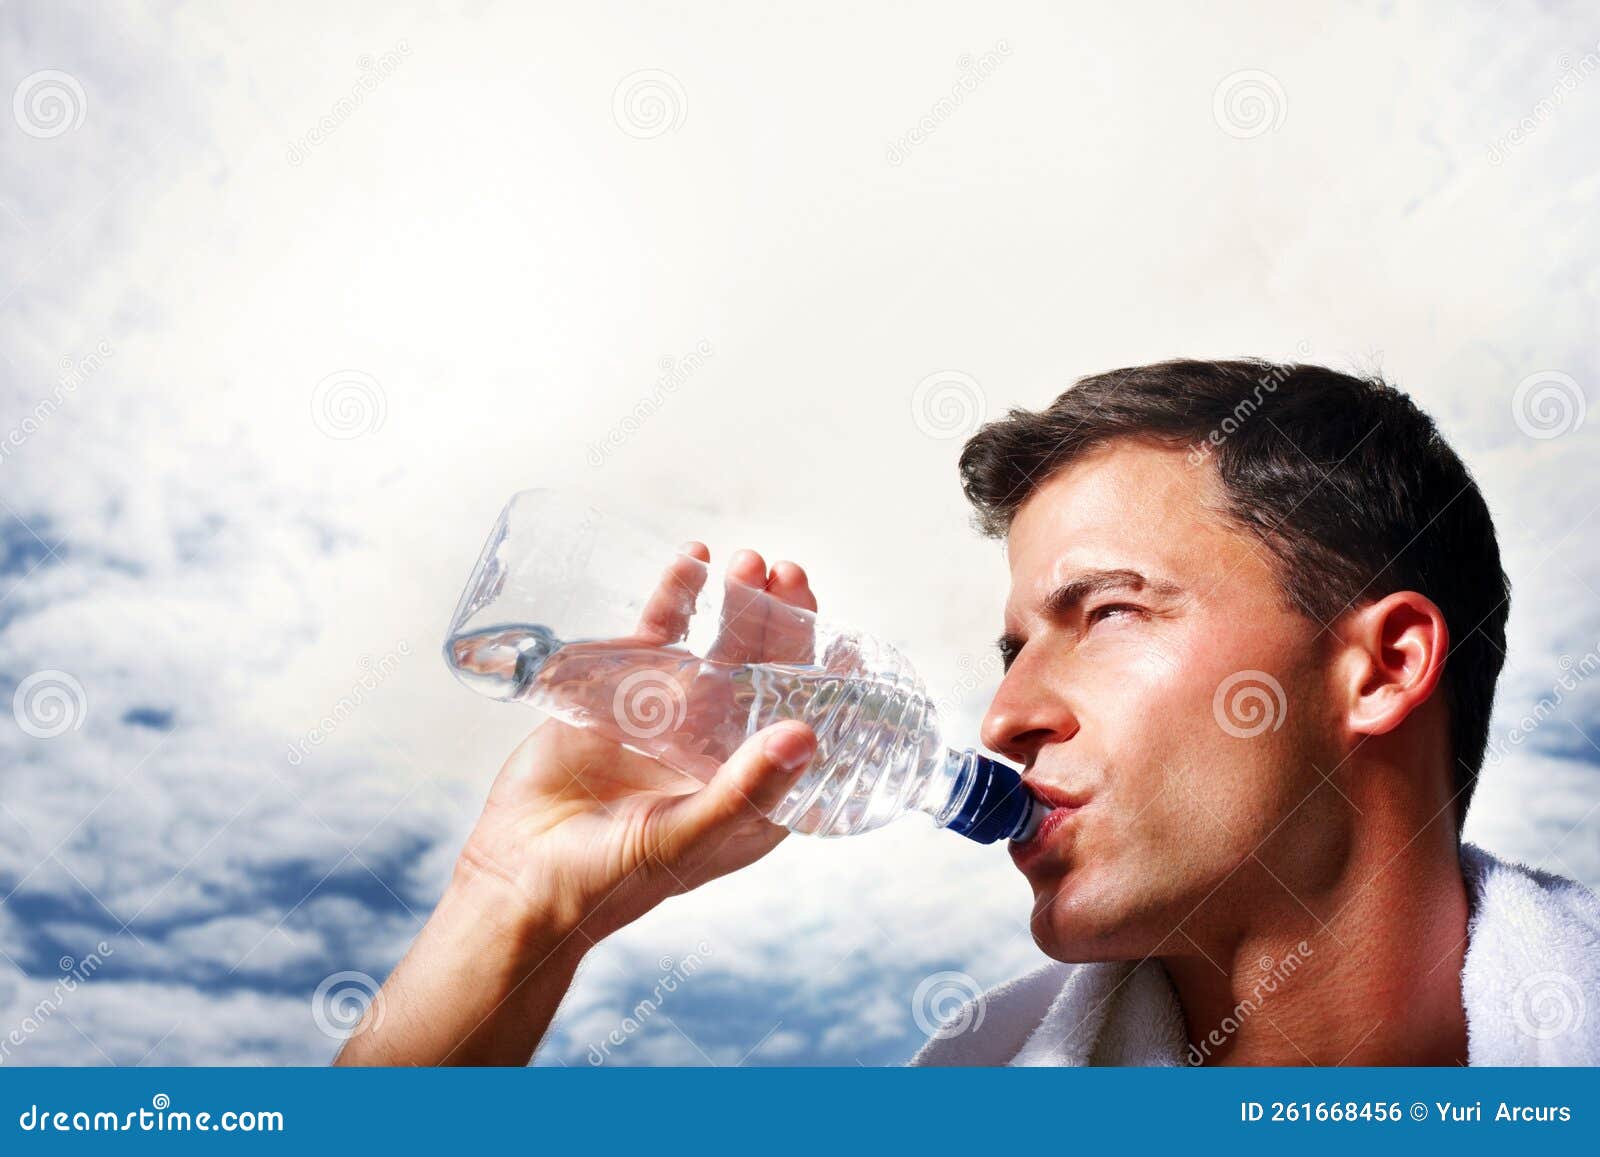 https://thumbs.dreamstime.com/z/smart-young-guy-drinking-water-copyspace-closeup-smart-young-guy-drinking-water-bottle-against-sky-smart-young-guy-261668456.jpg